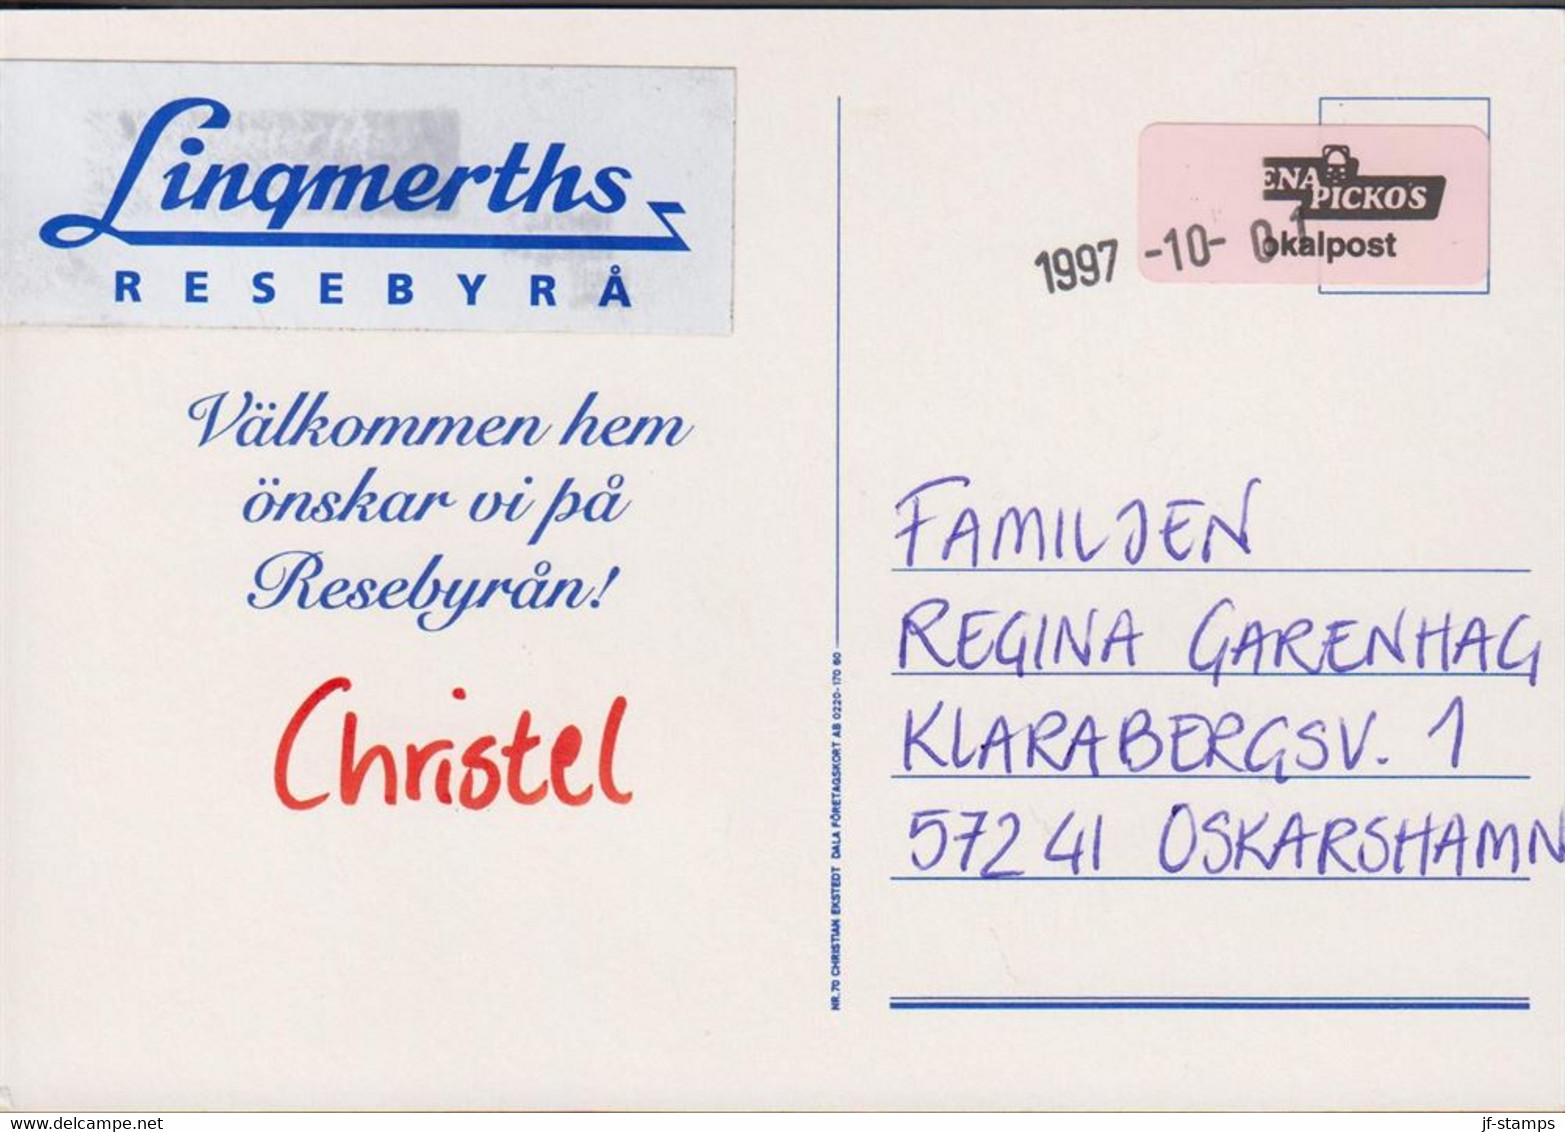 1997. SVERIGE. ADENA PICKOS Lokalpost In Oskarshamn. Red Seal On Post Card Cancelled 1997-10-01. Welcome H... - JF520089 - Emissions Locales